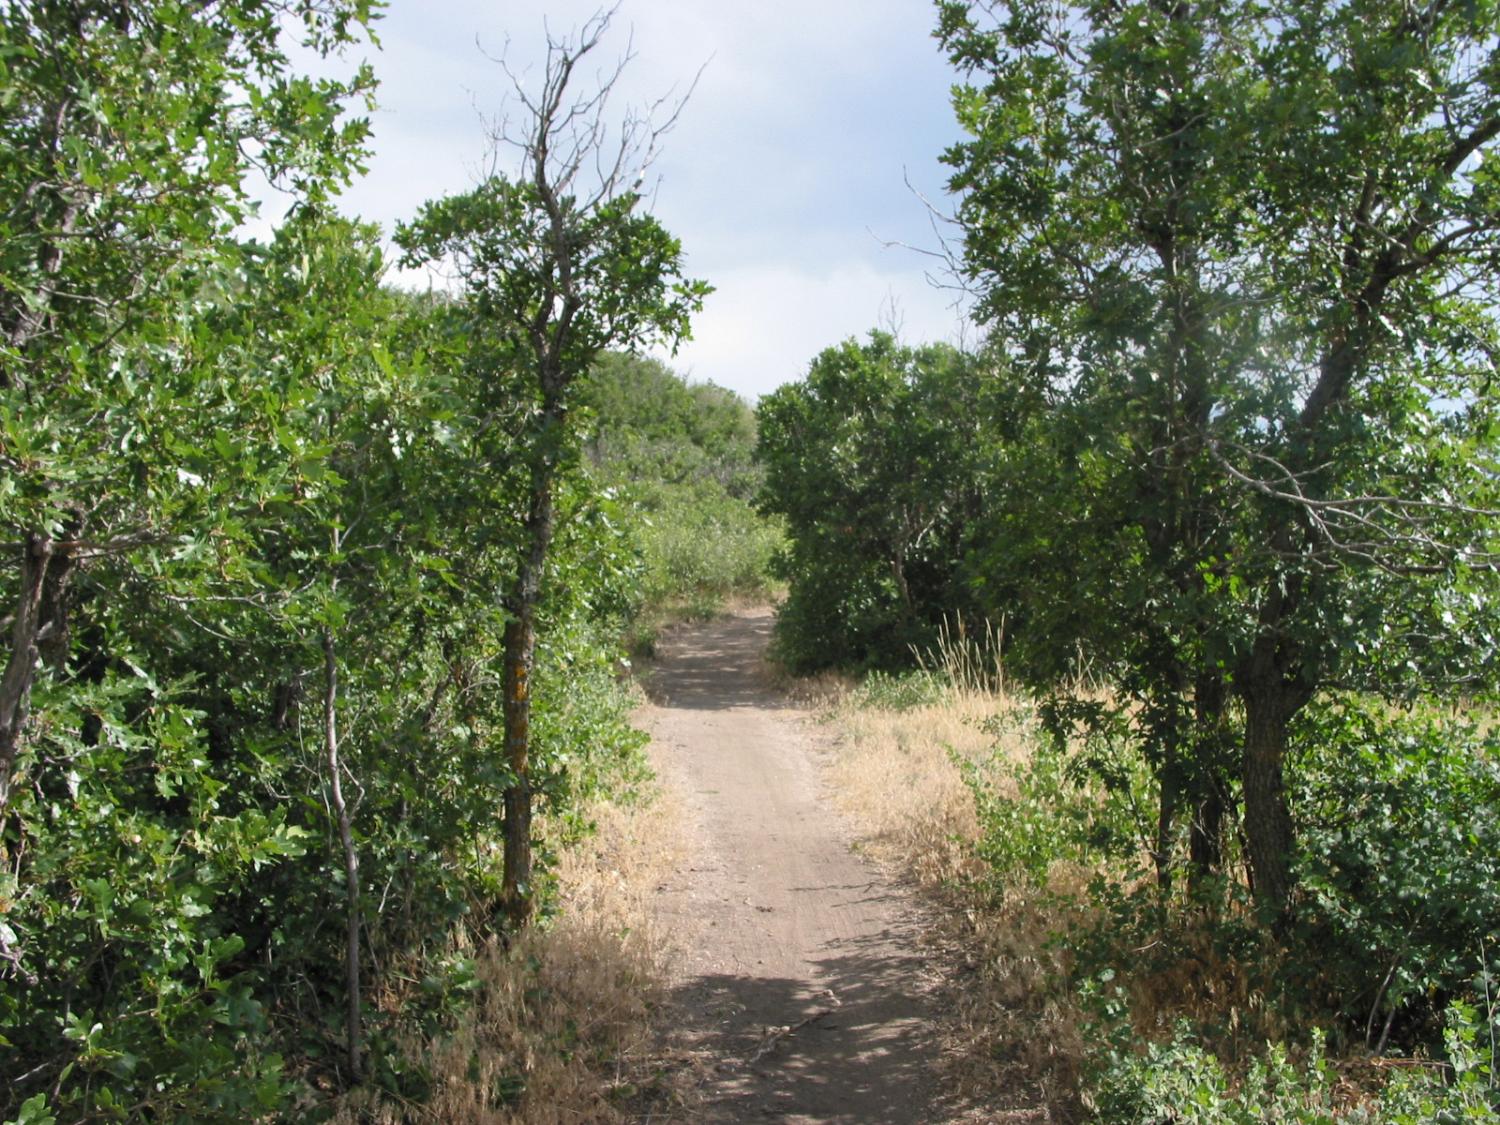 Scrub Oak along the Cowboy Up Trail in August.